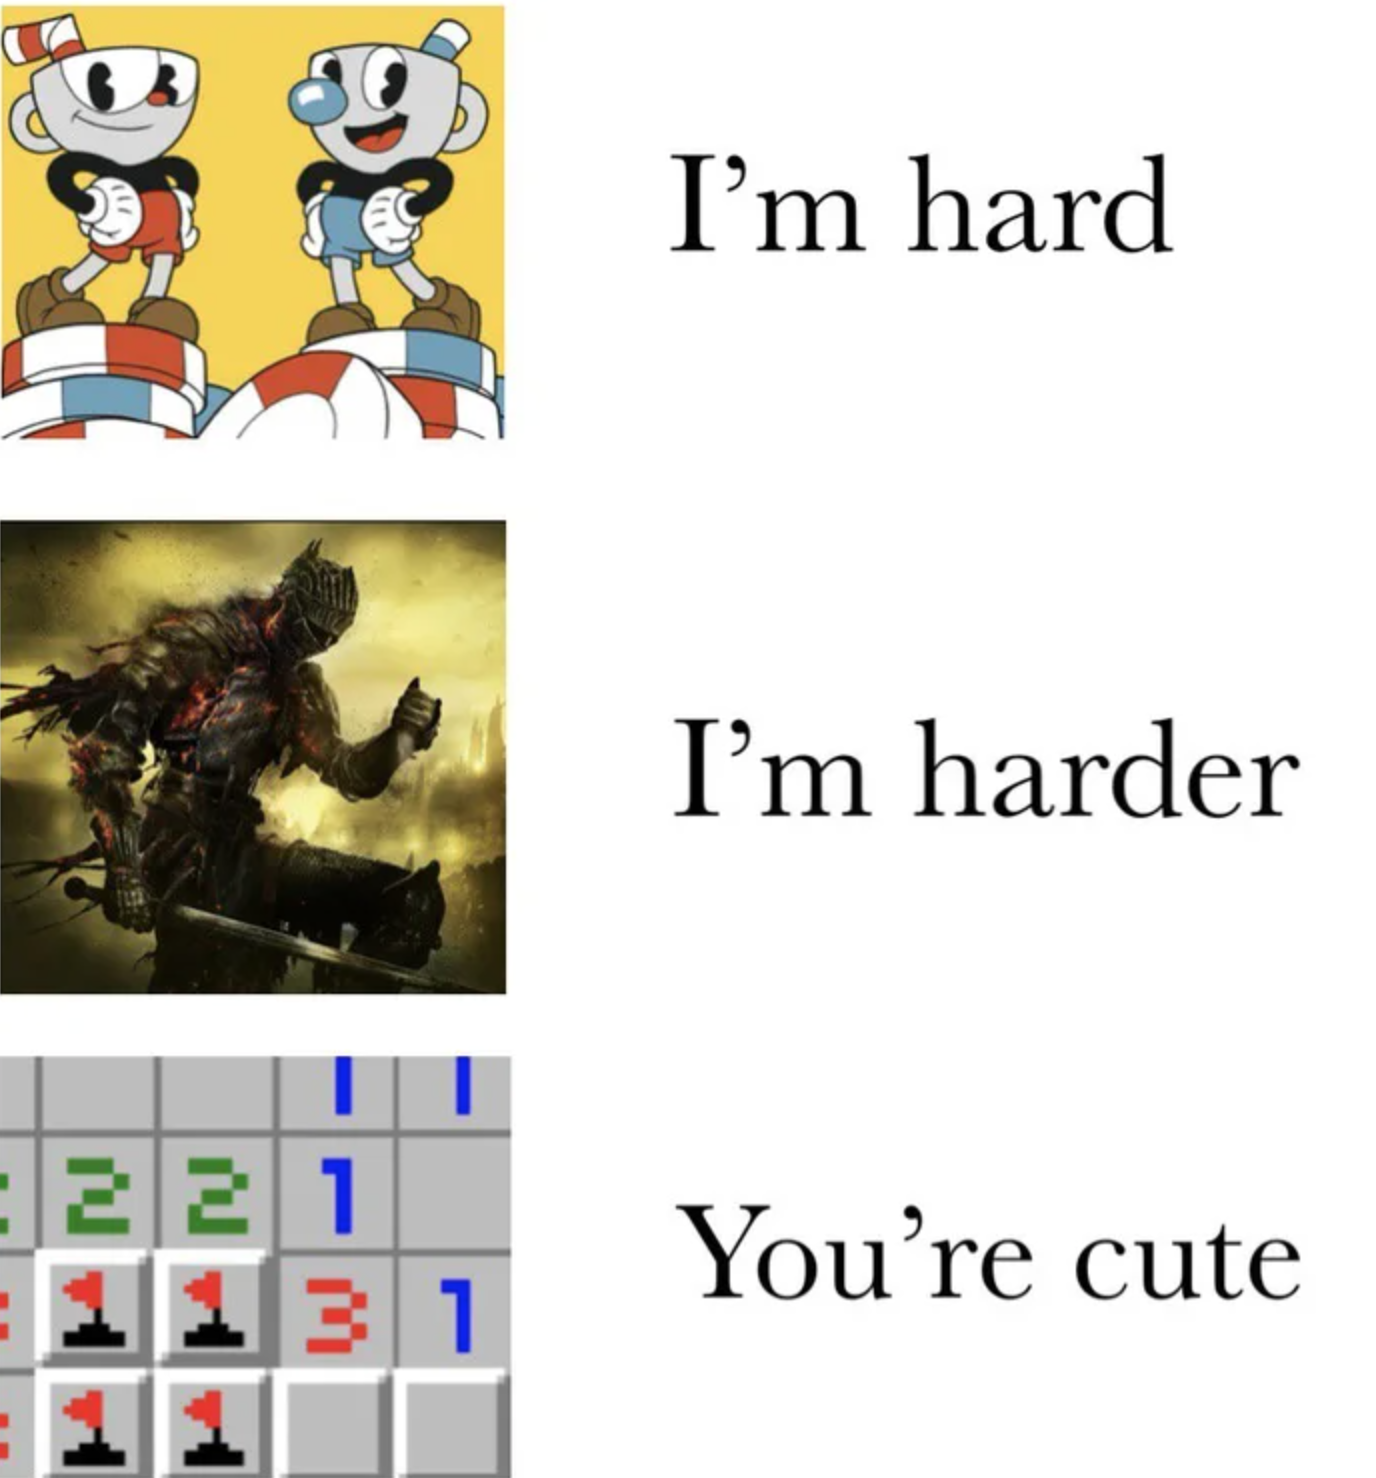 funny gaming memes  - underoath - I'm hard I'm harder 221 3 1 You're cute